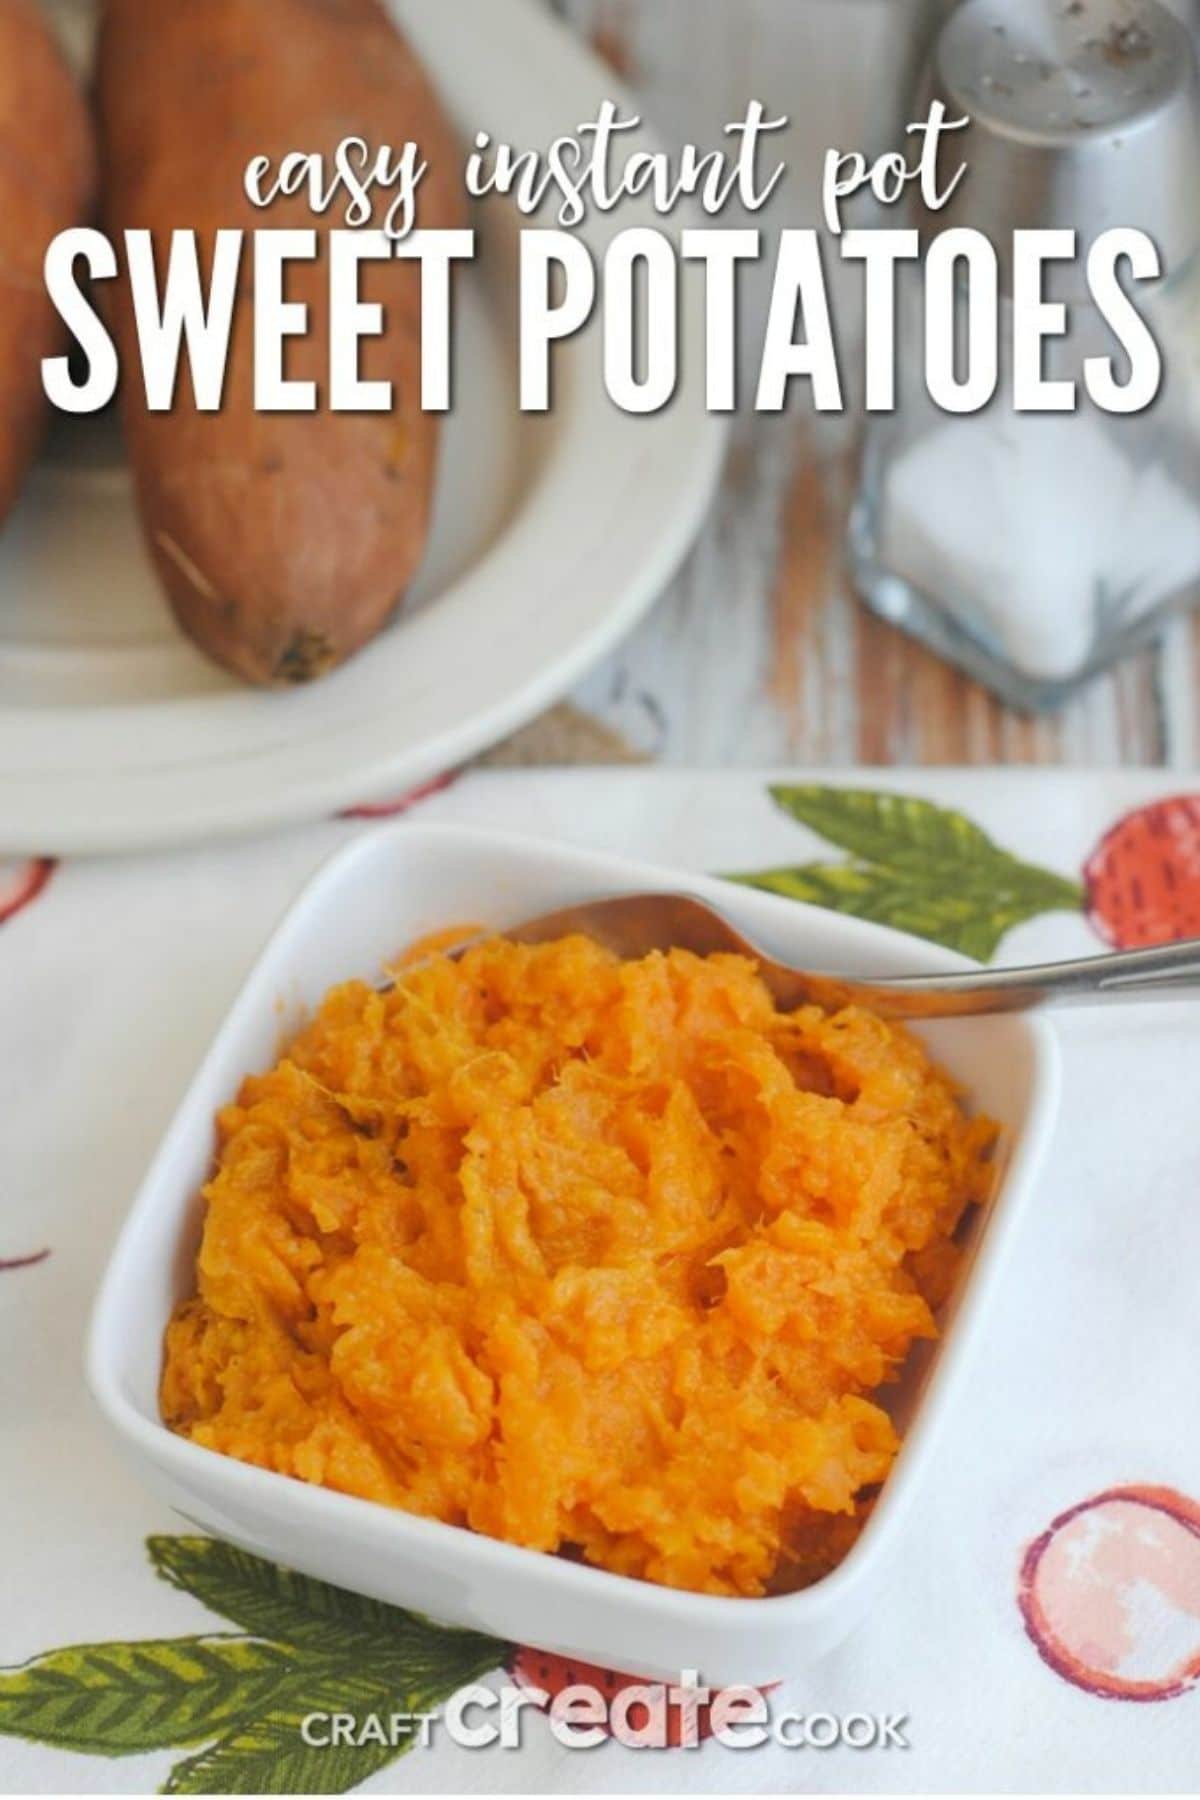 Sweet potatoes mashed